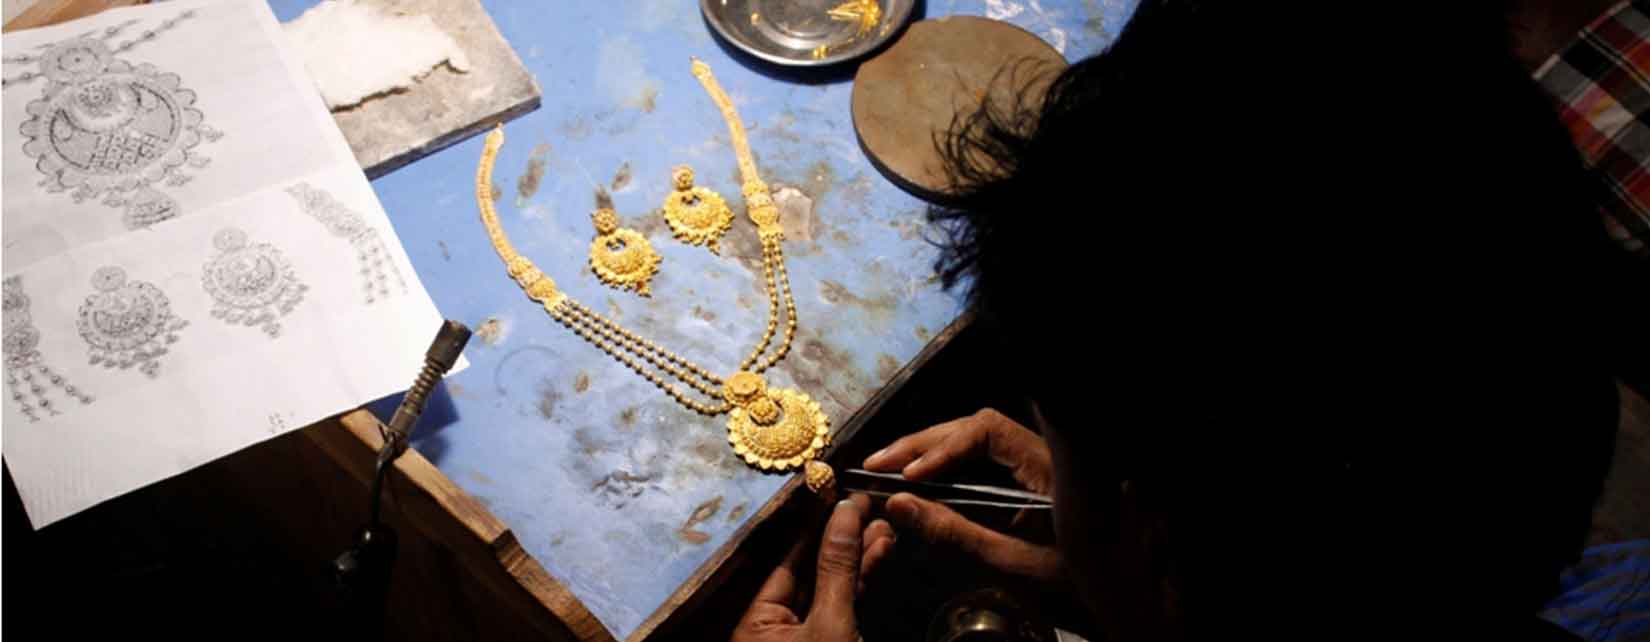 shalimar craftmanship